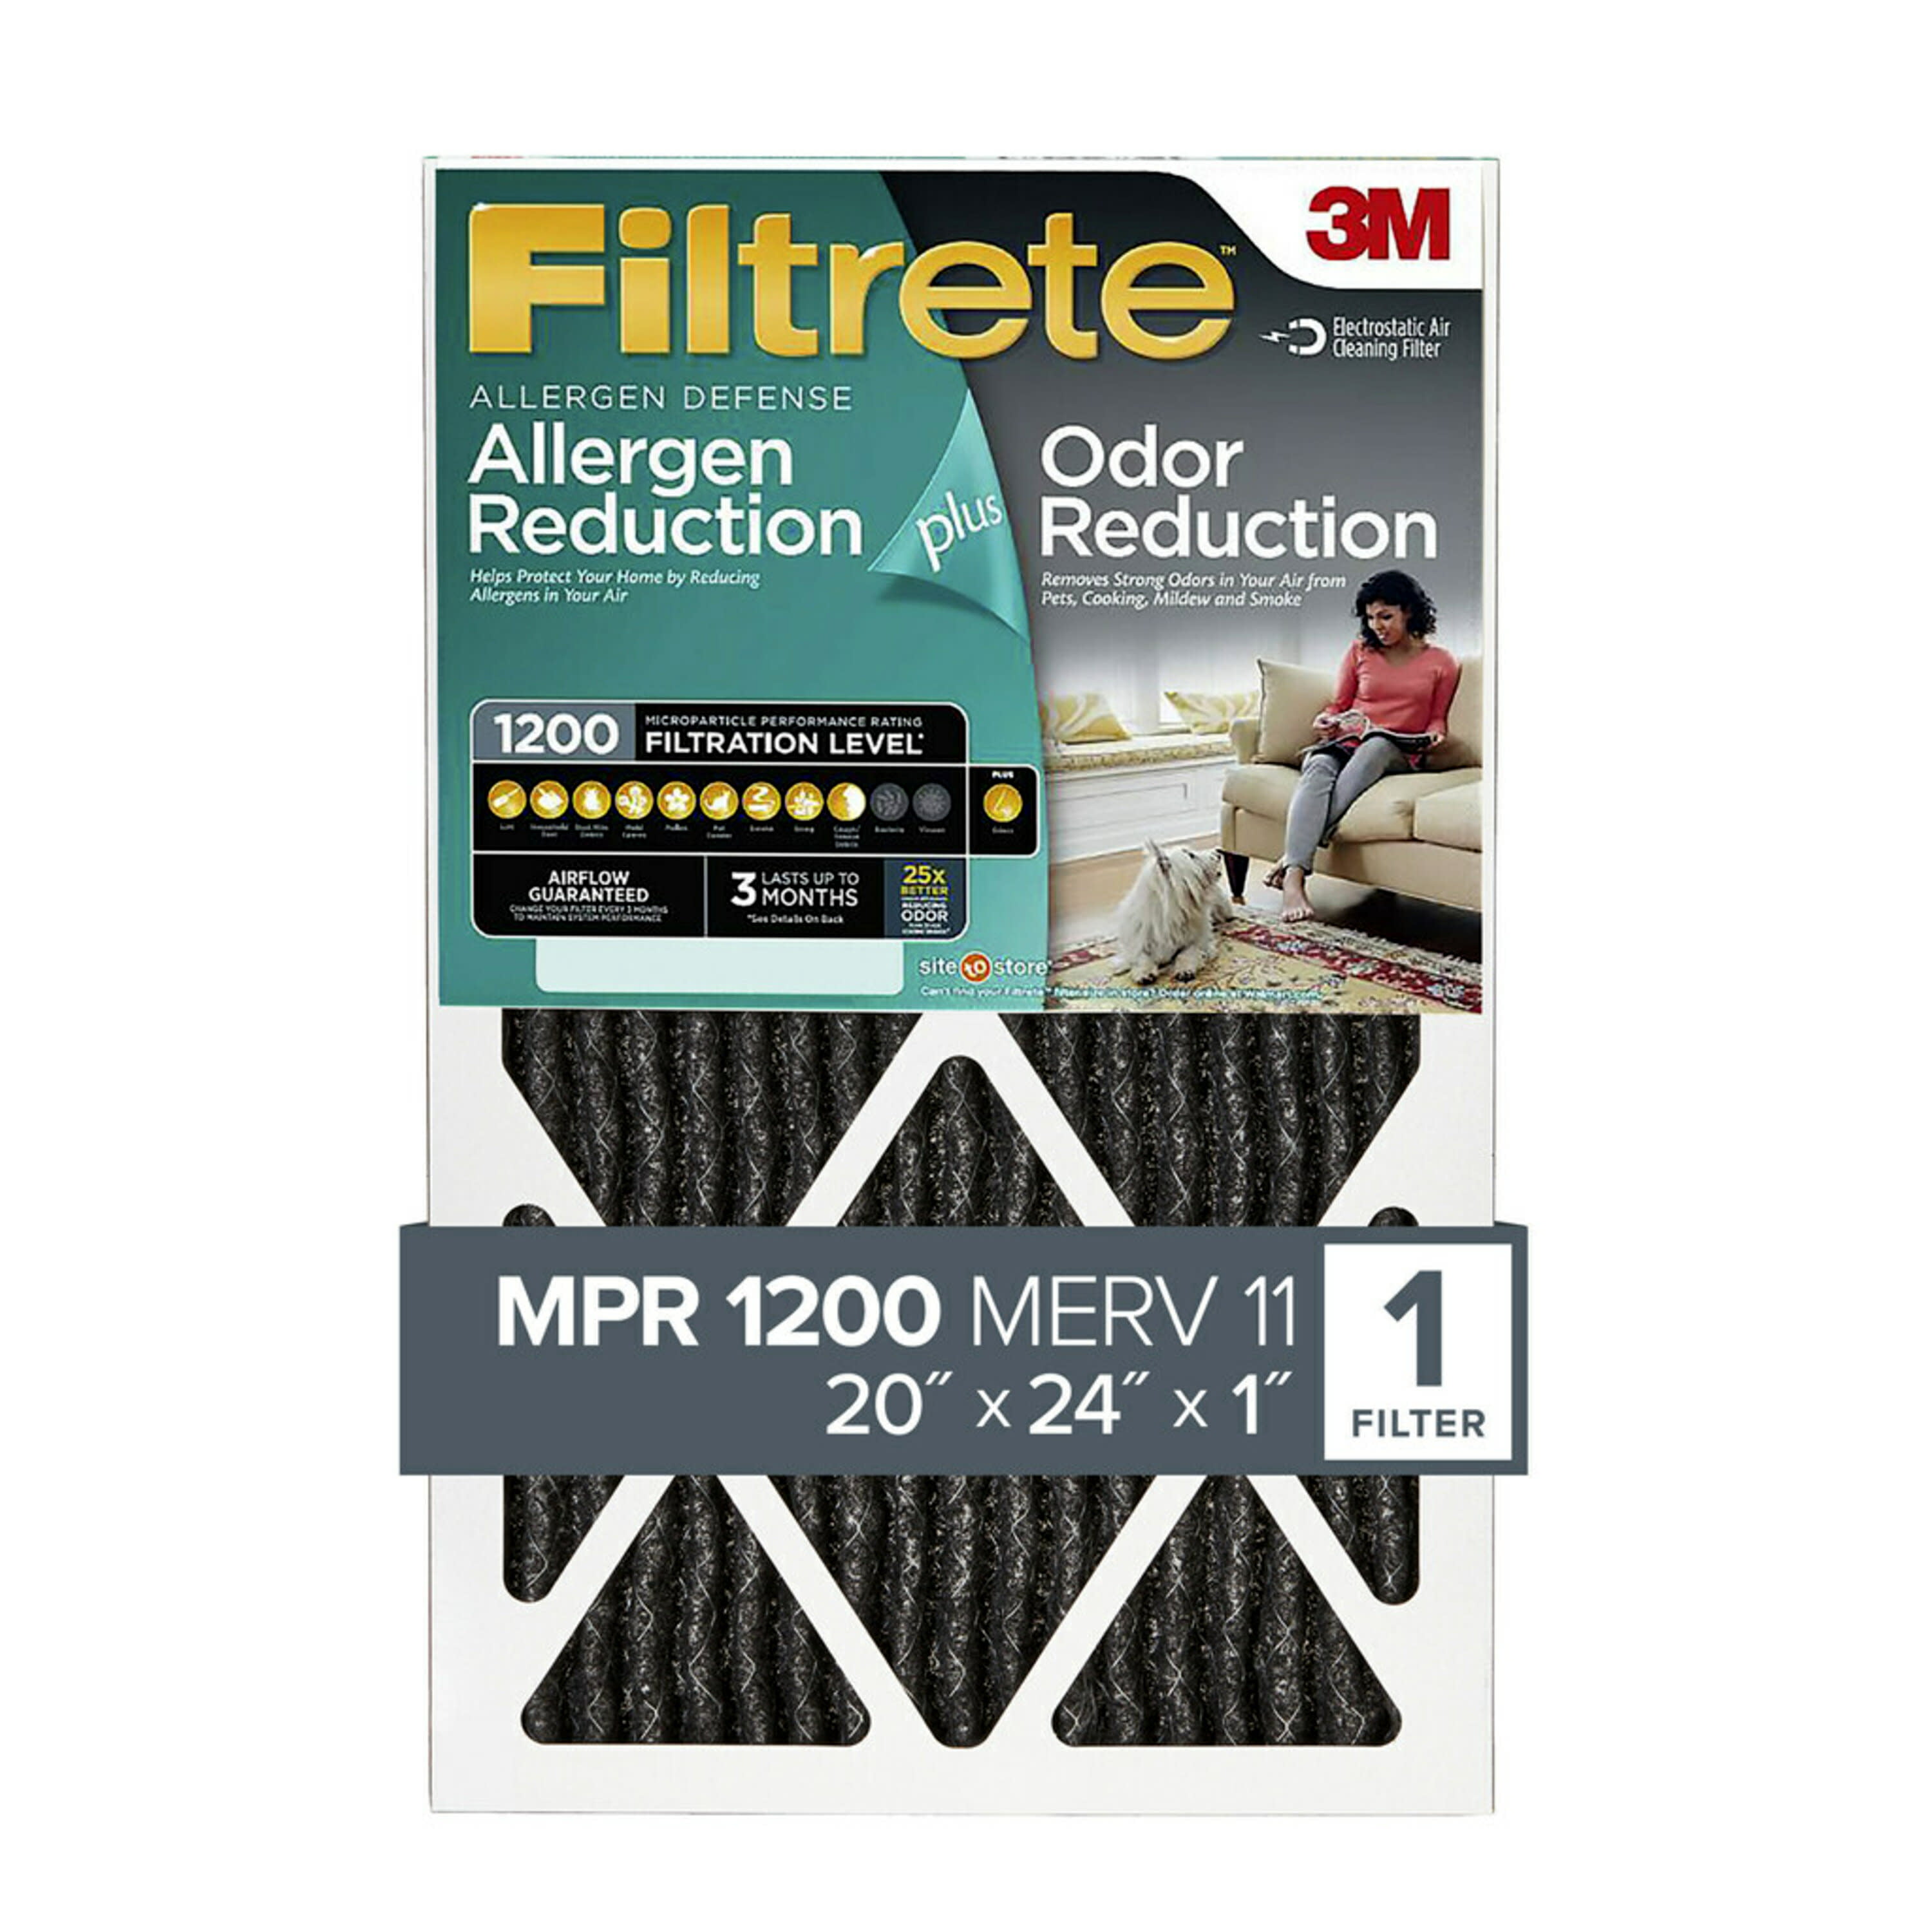 filtrete-20x24x1-allergen-plus-odor-reduction-hvac-furnace-air-filter